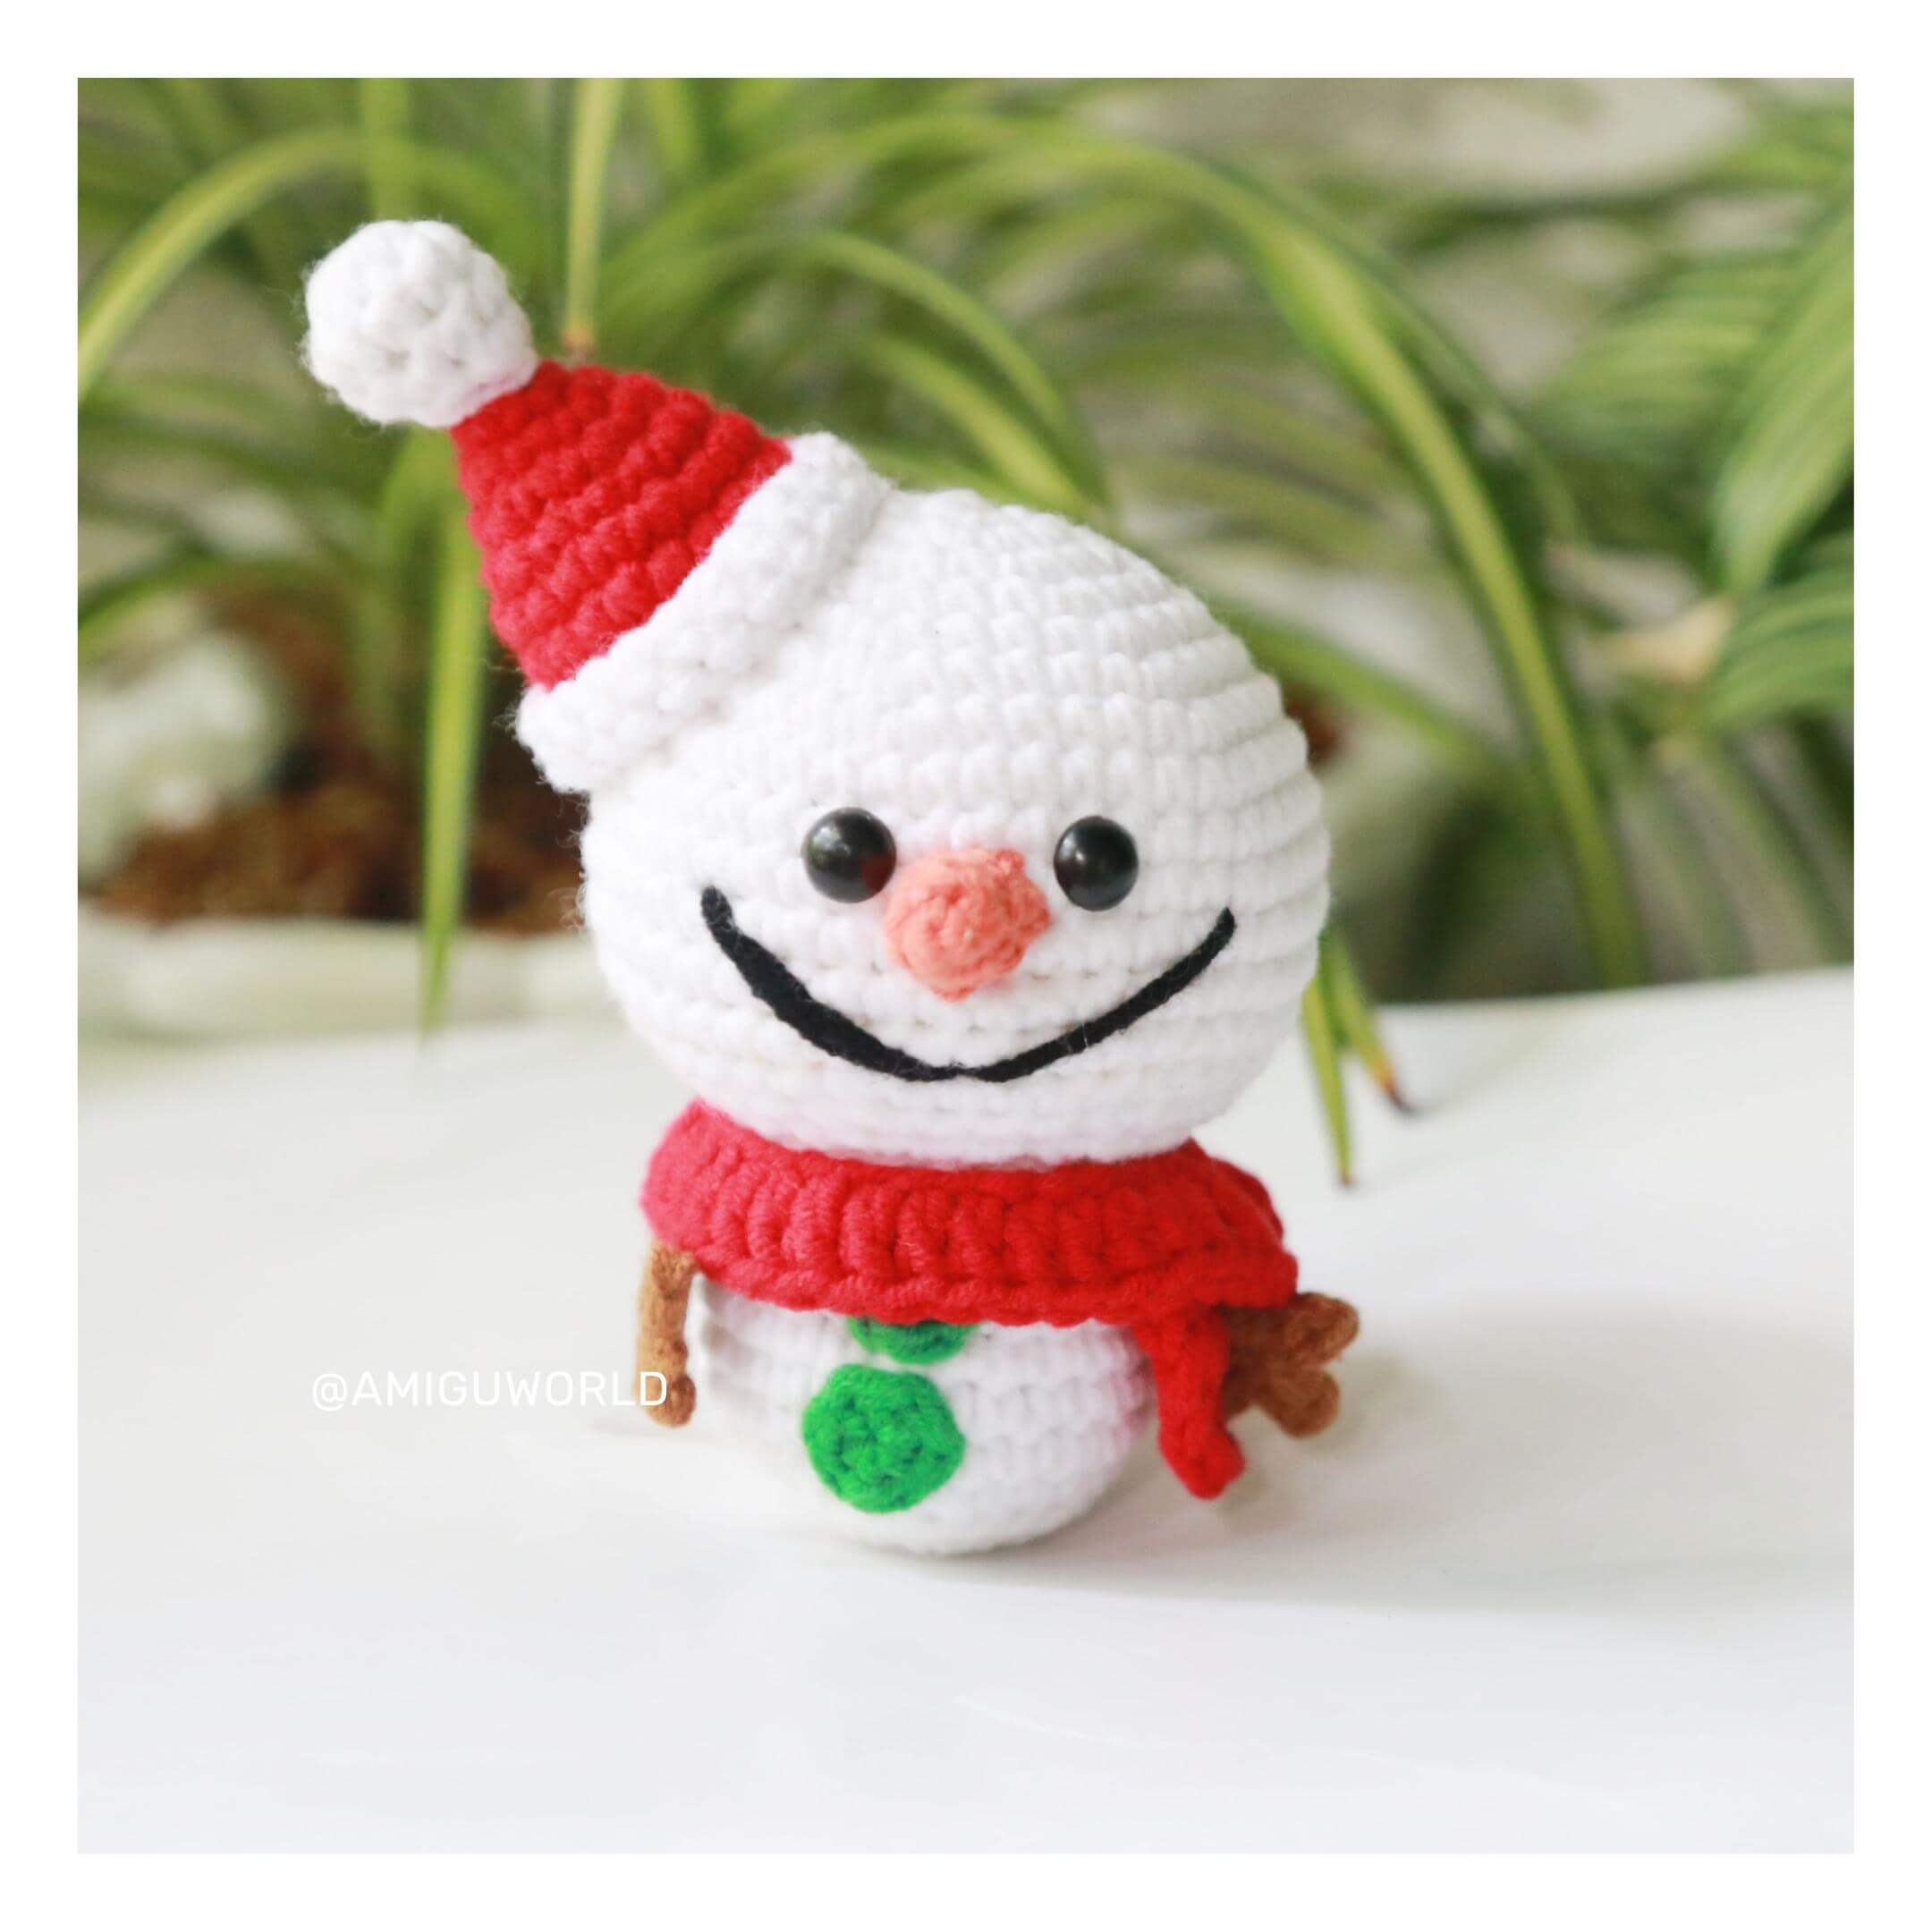 snowman-amigurumi-crochet-pattern-by-amiguworld (6)